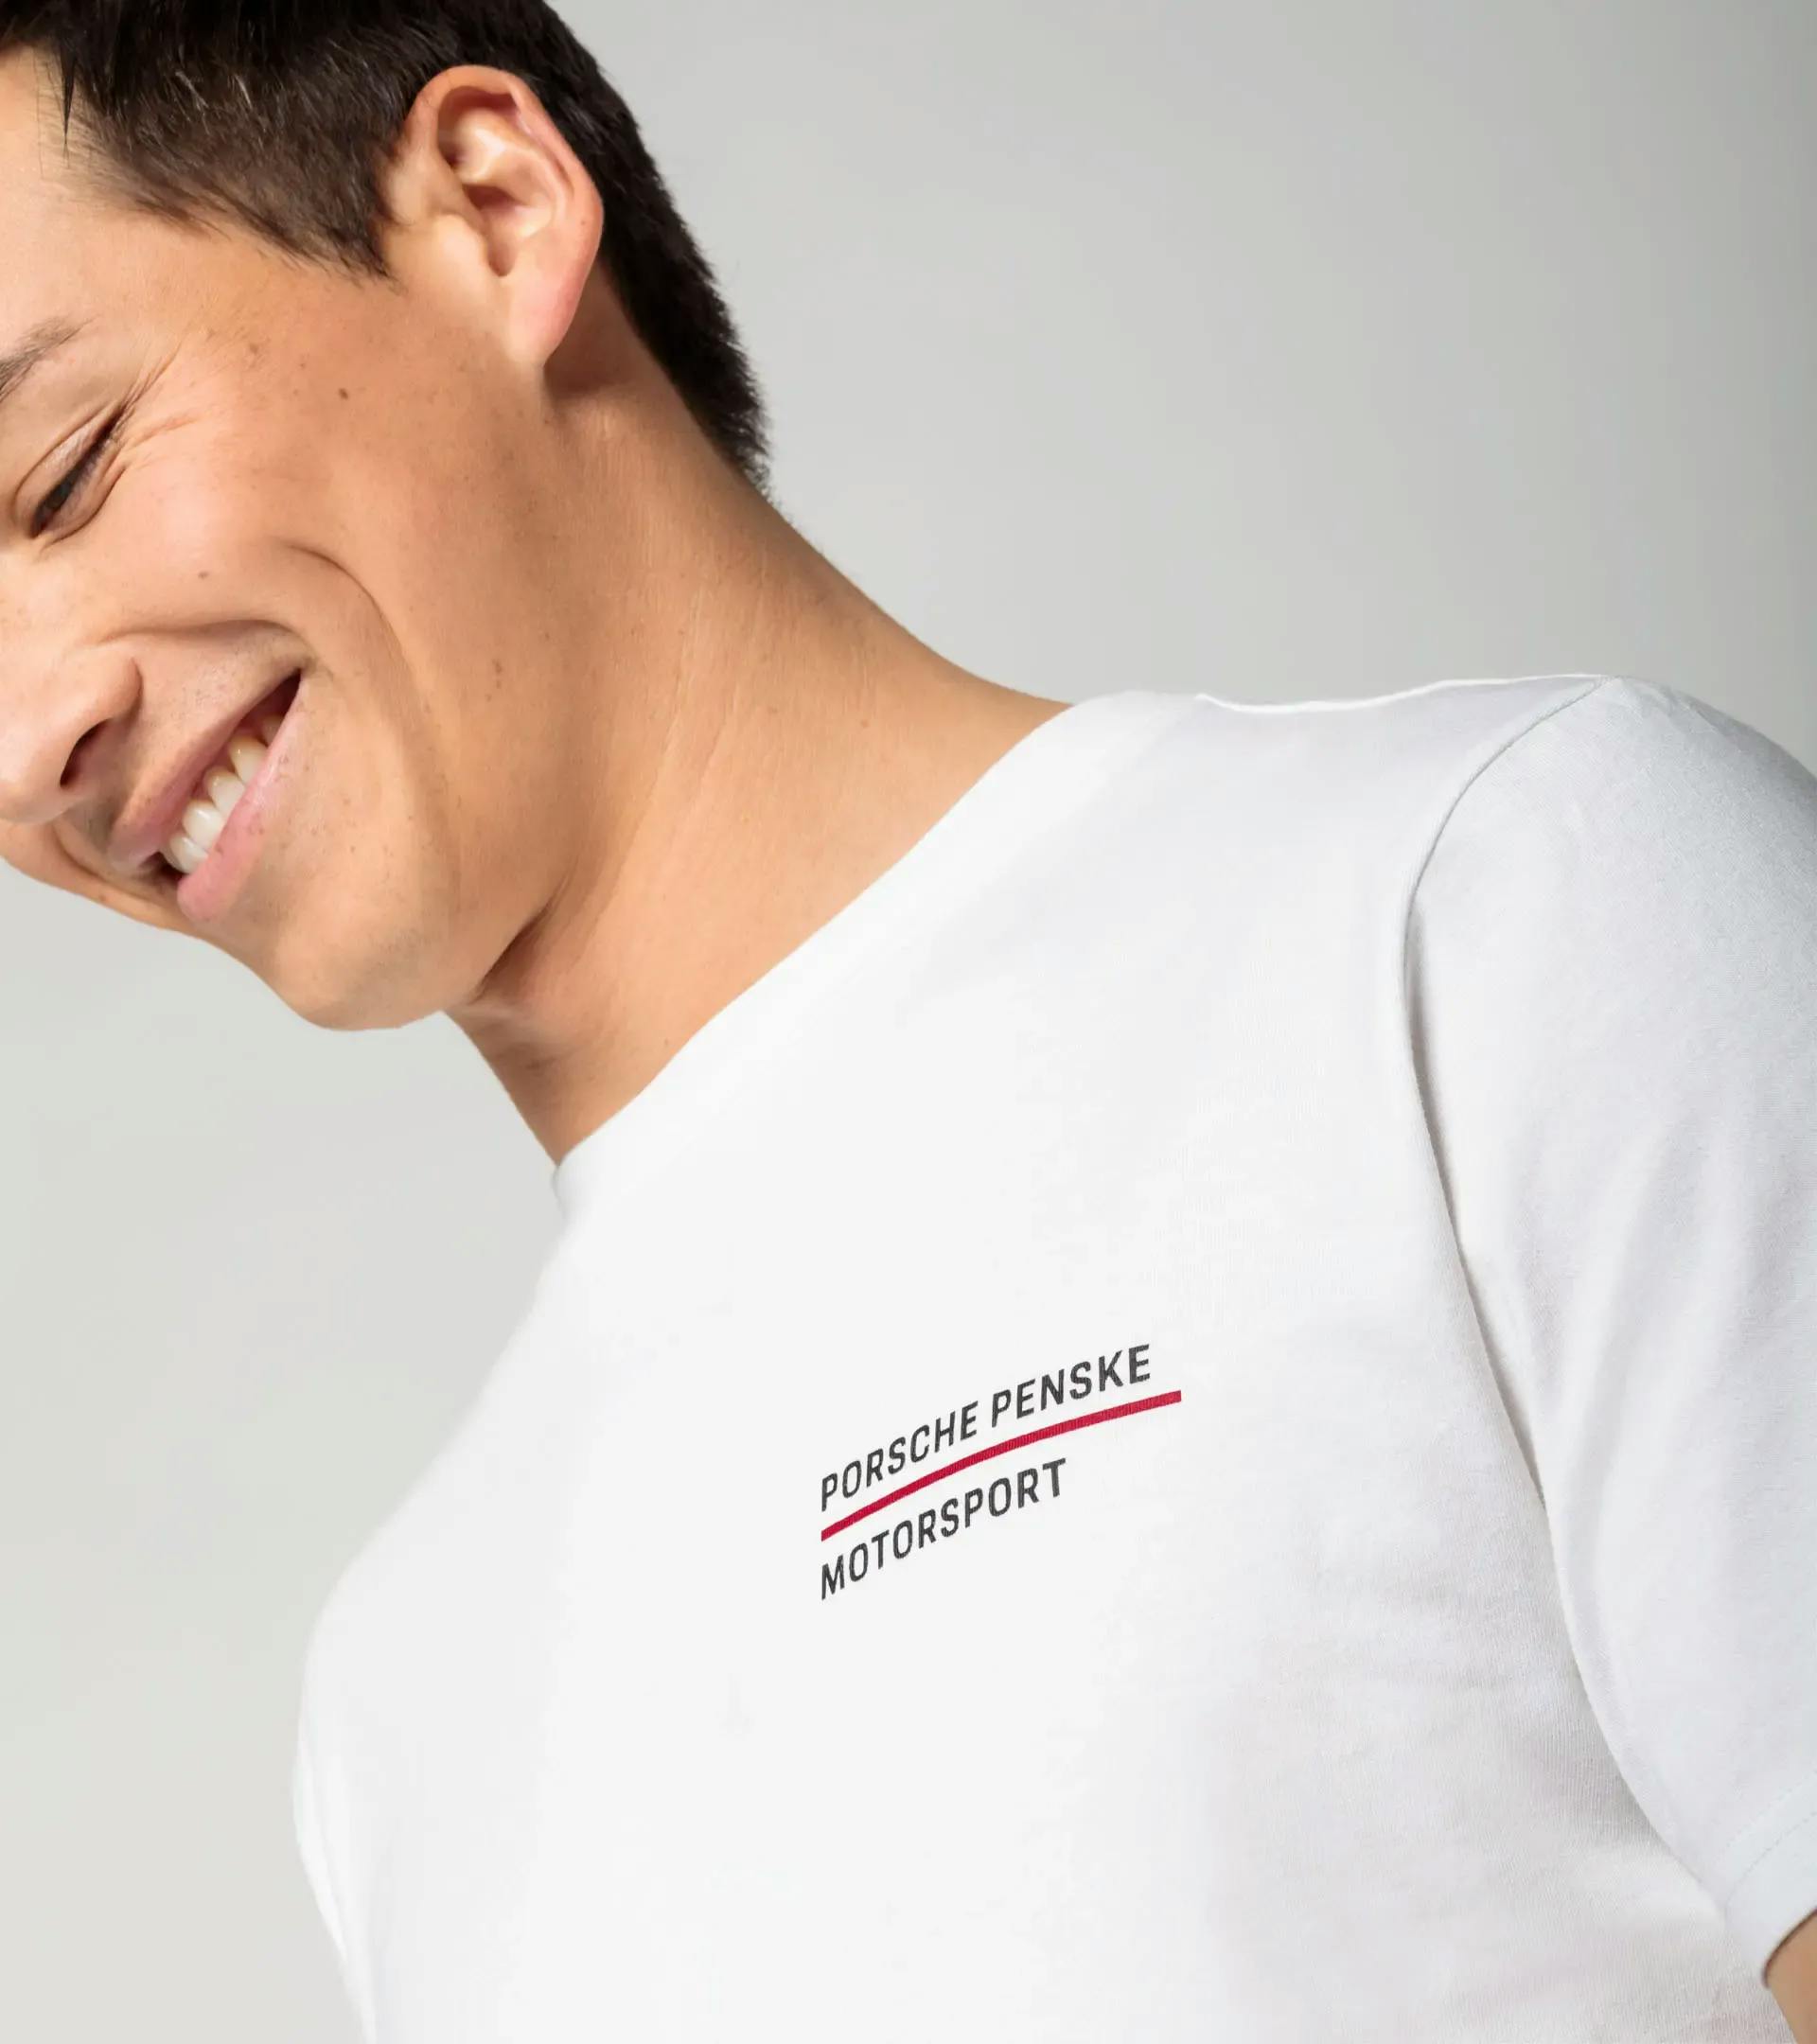 Camiseta unisex – Porsche Penske Motorsport 3